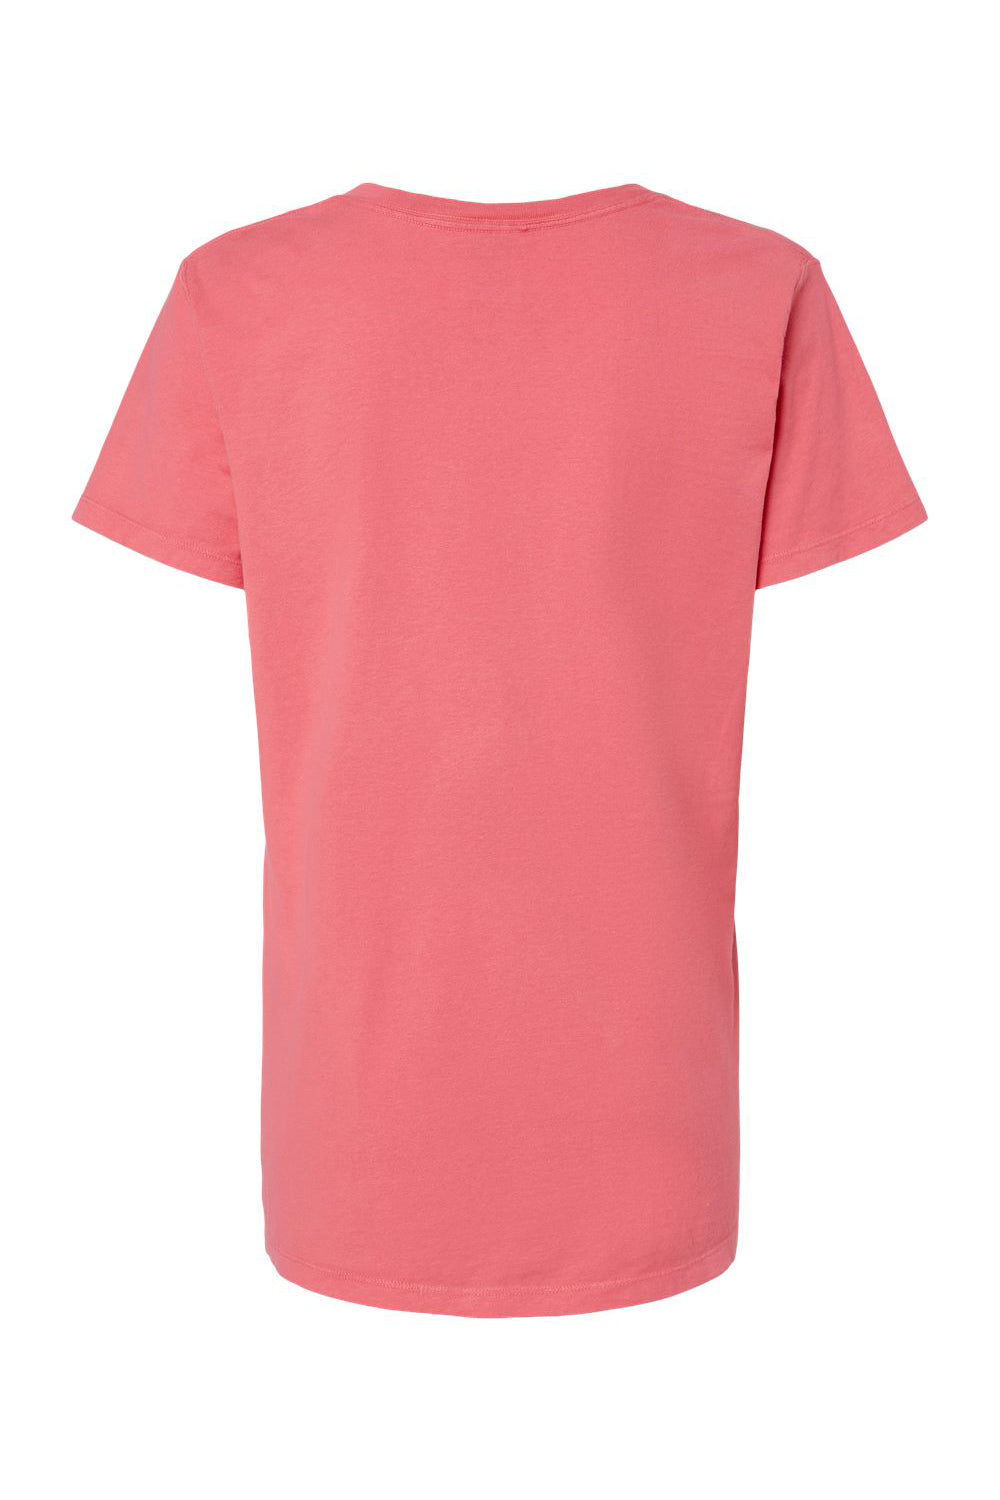 ComfortWash By Hanes GDH125 Mens Garment Dyed Short Sleeve V-Neck T-Shirt Coral Craze Flat Back